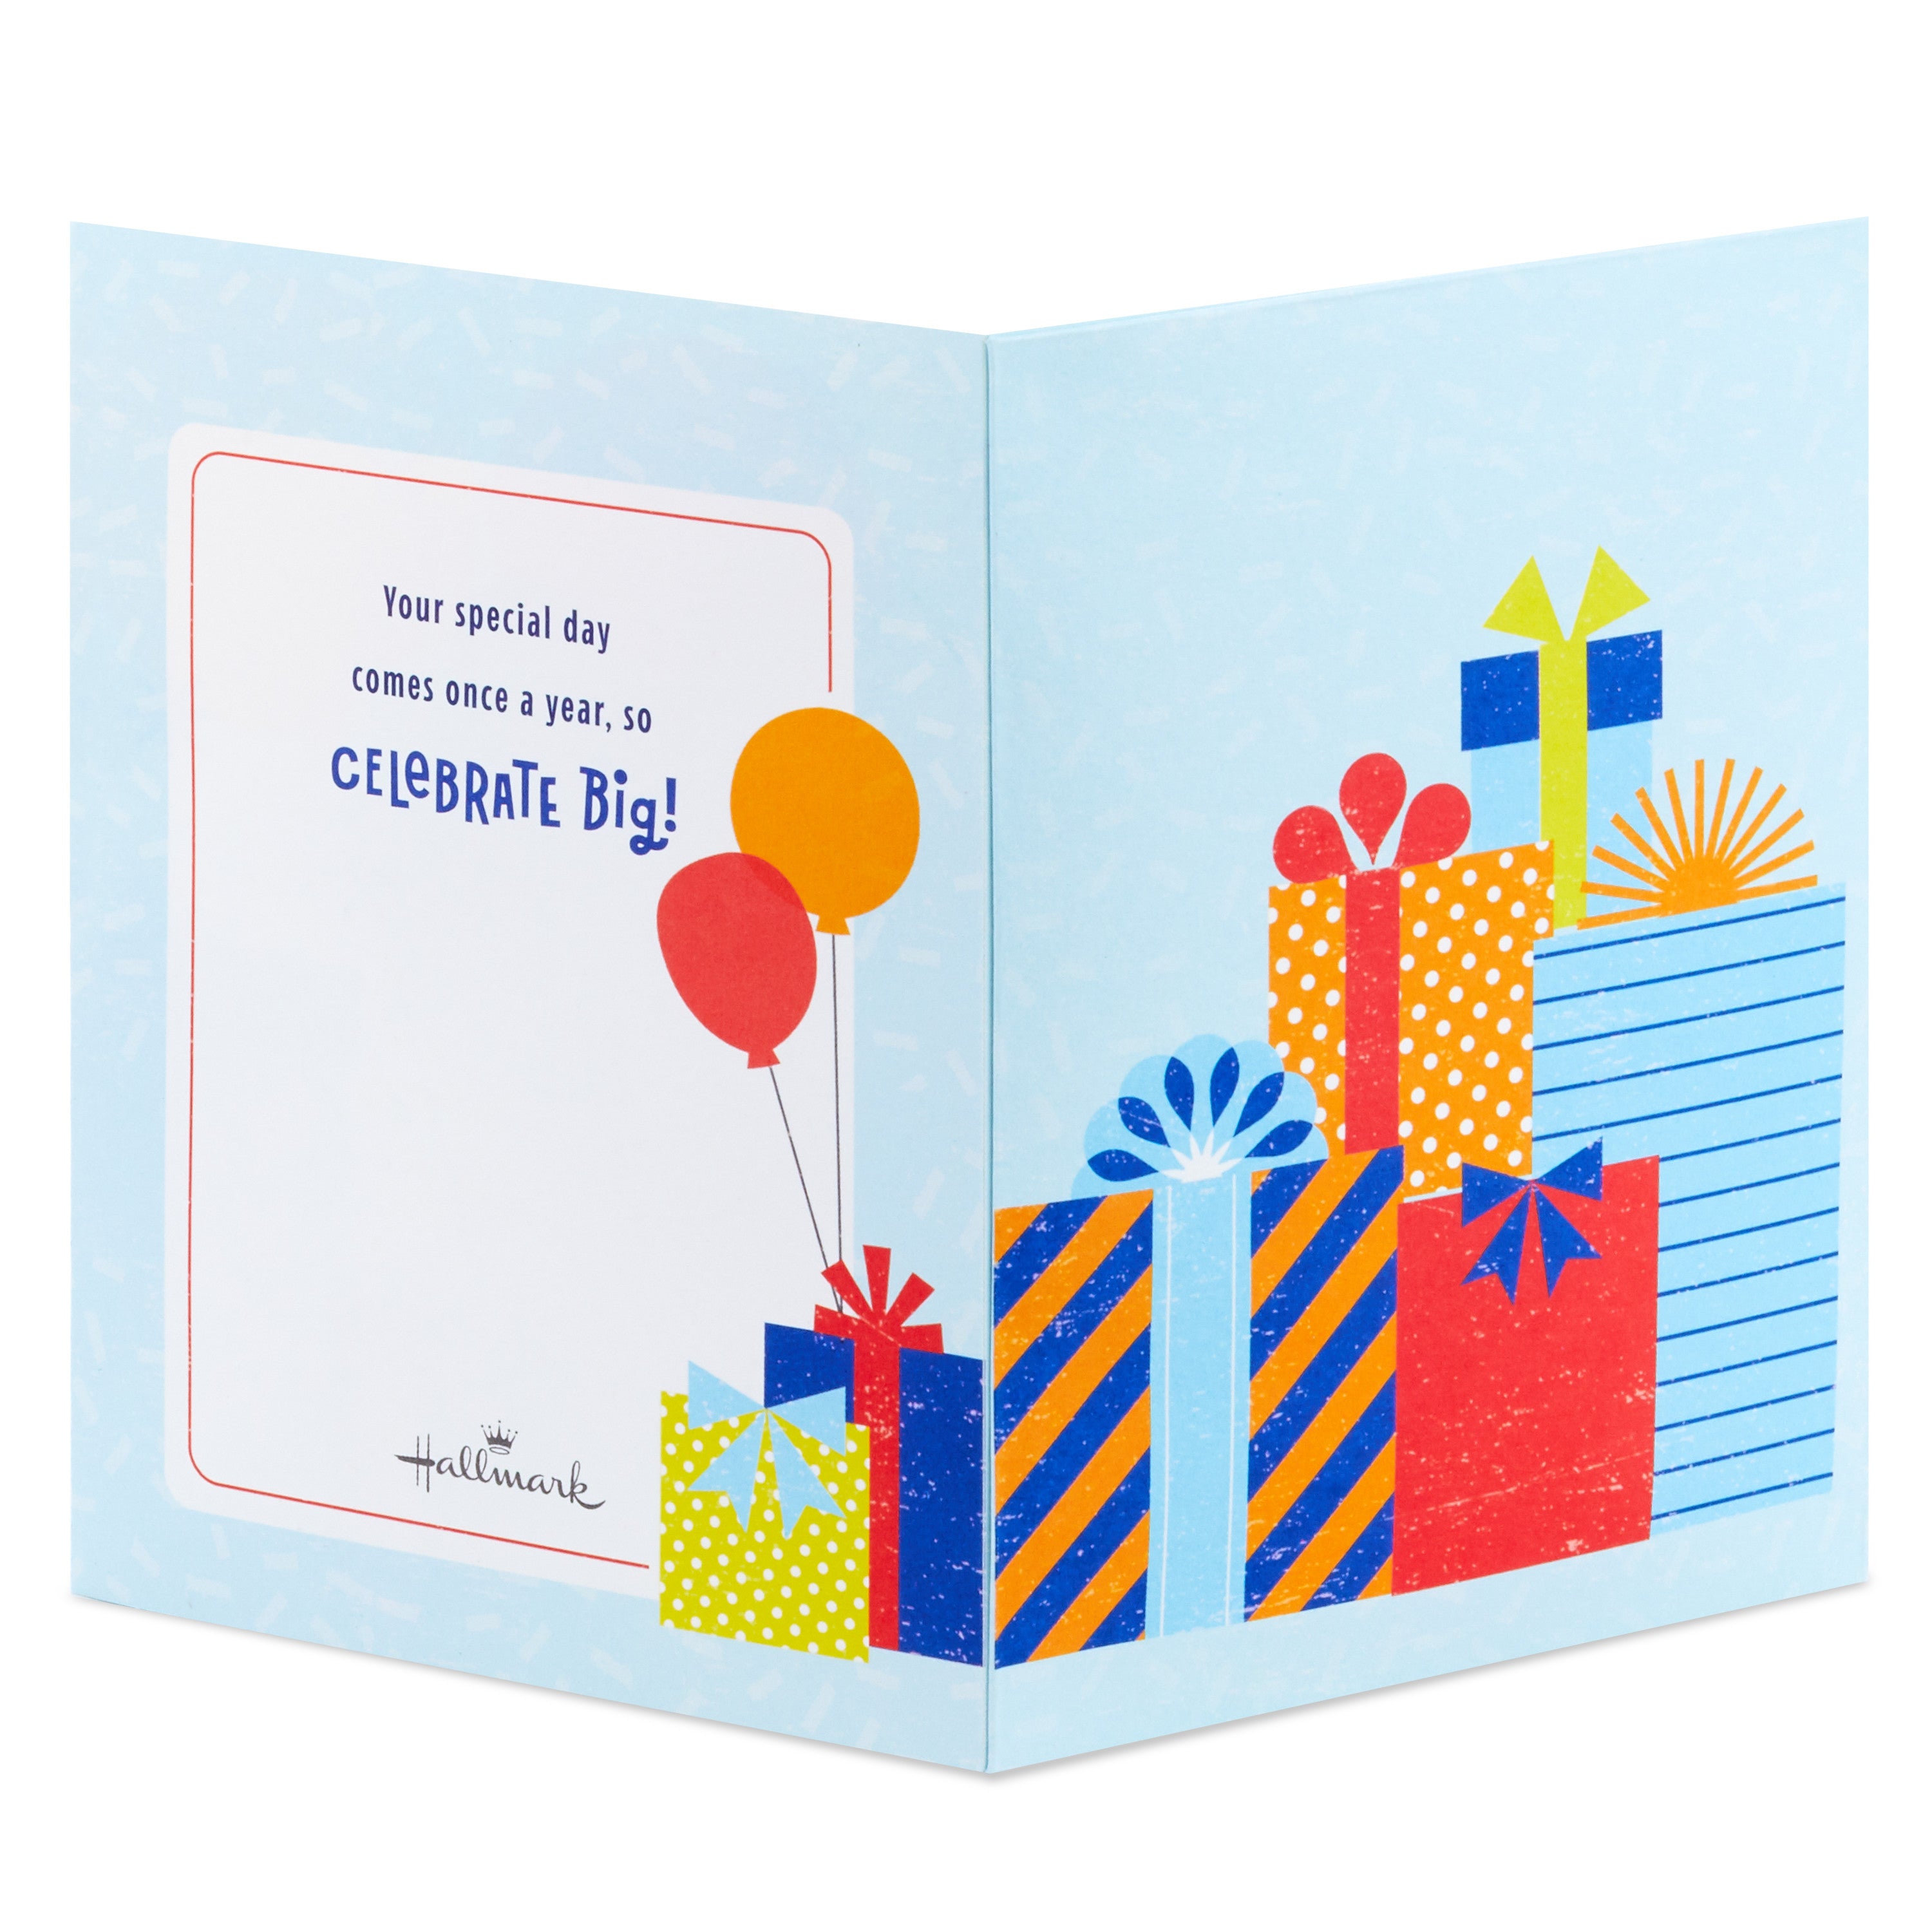  Paper Wonder Musical Pop Up Birthday Card (Birthday Presents, Plays Happy Birthday)